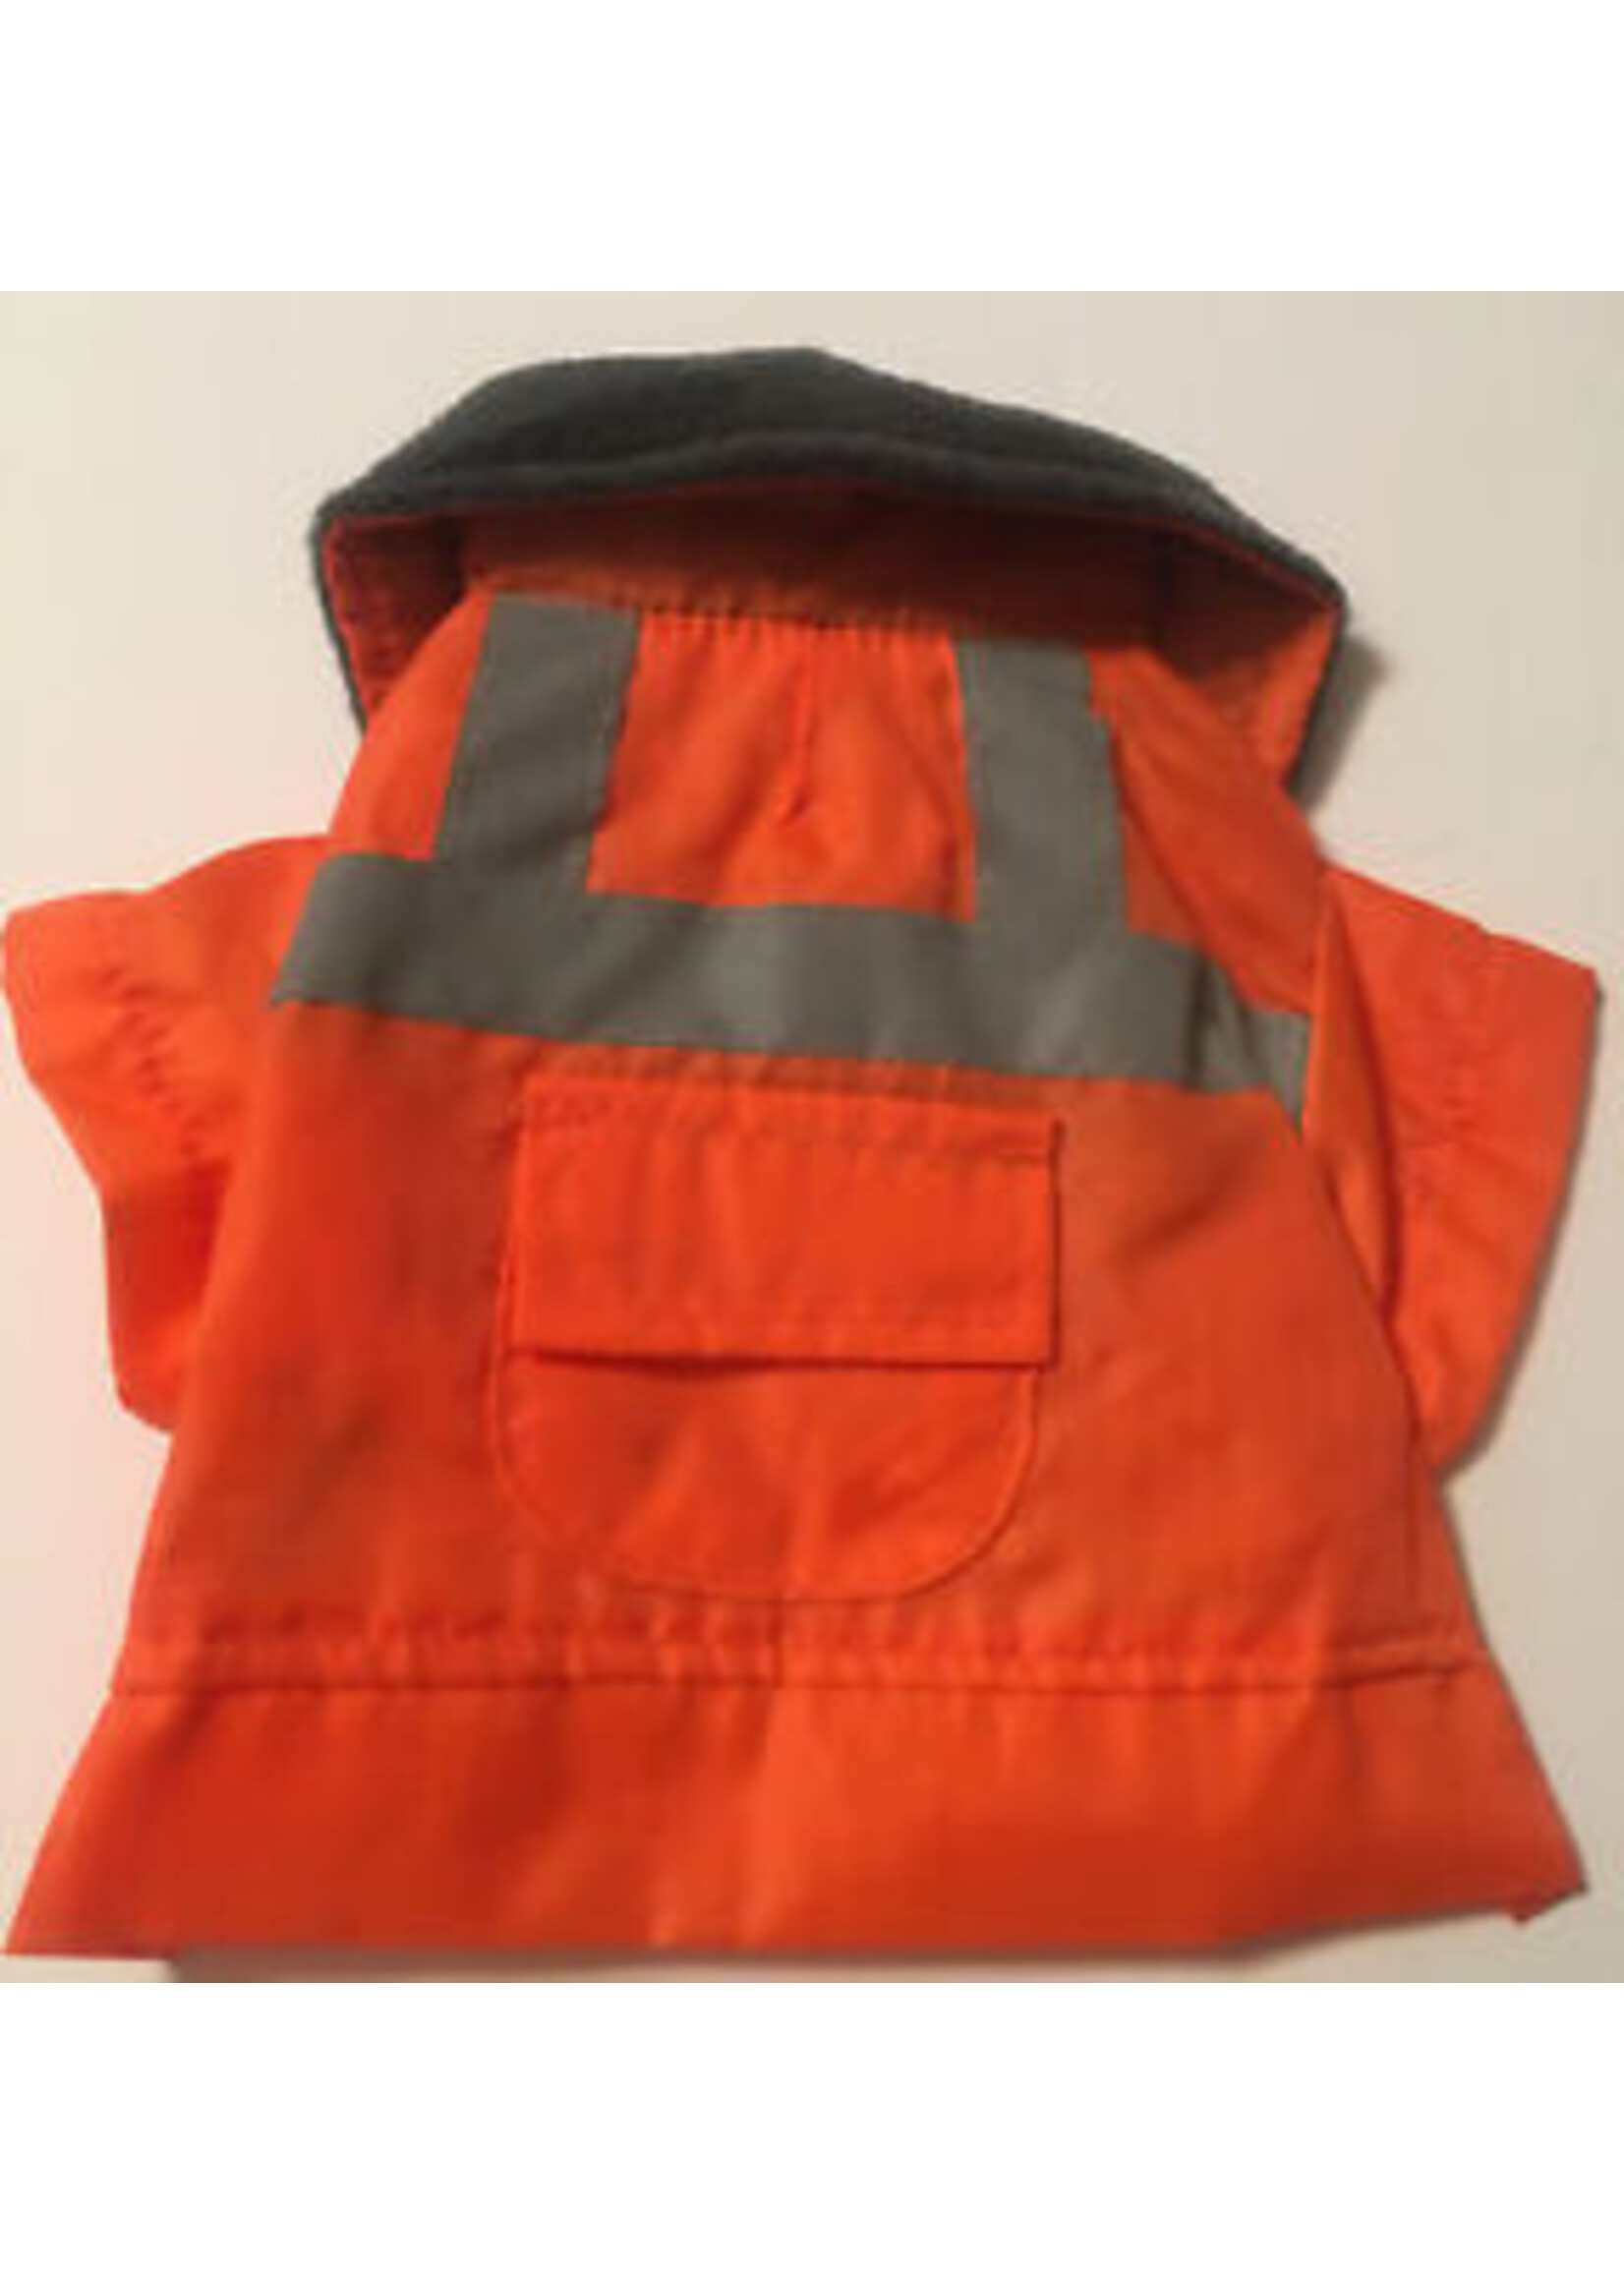 Penn Plax Penn Plax Pooch Plus Safety Vest Medium